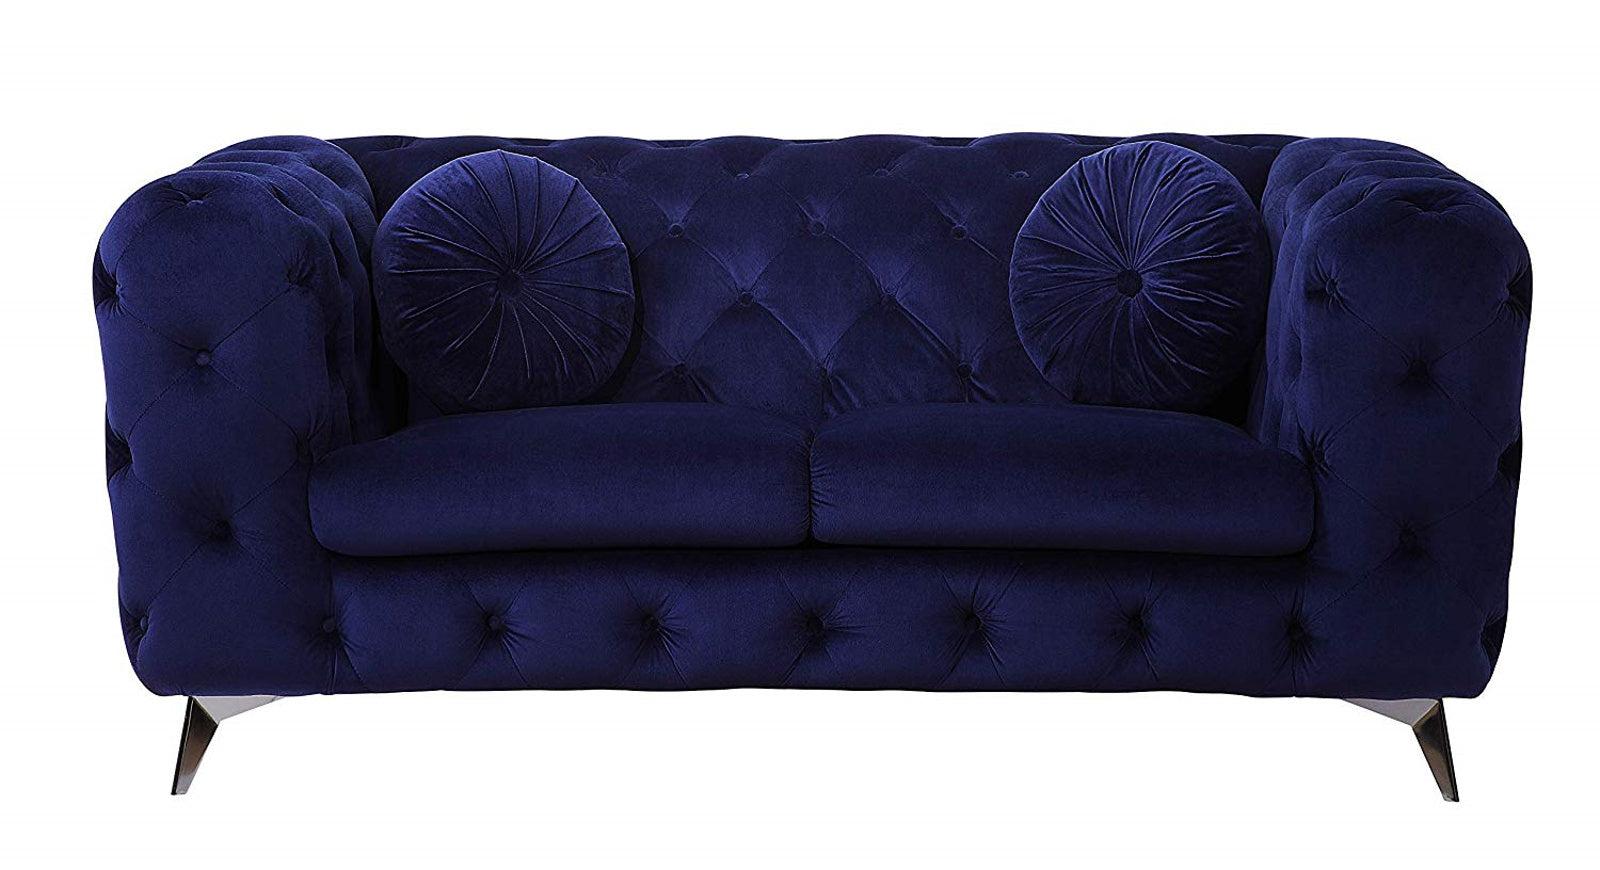 Acme Furniture Atronia Loveseat in Blue 54901  Half Price Furniture